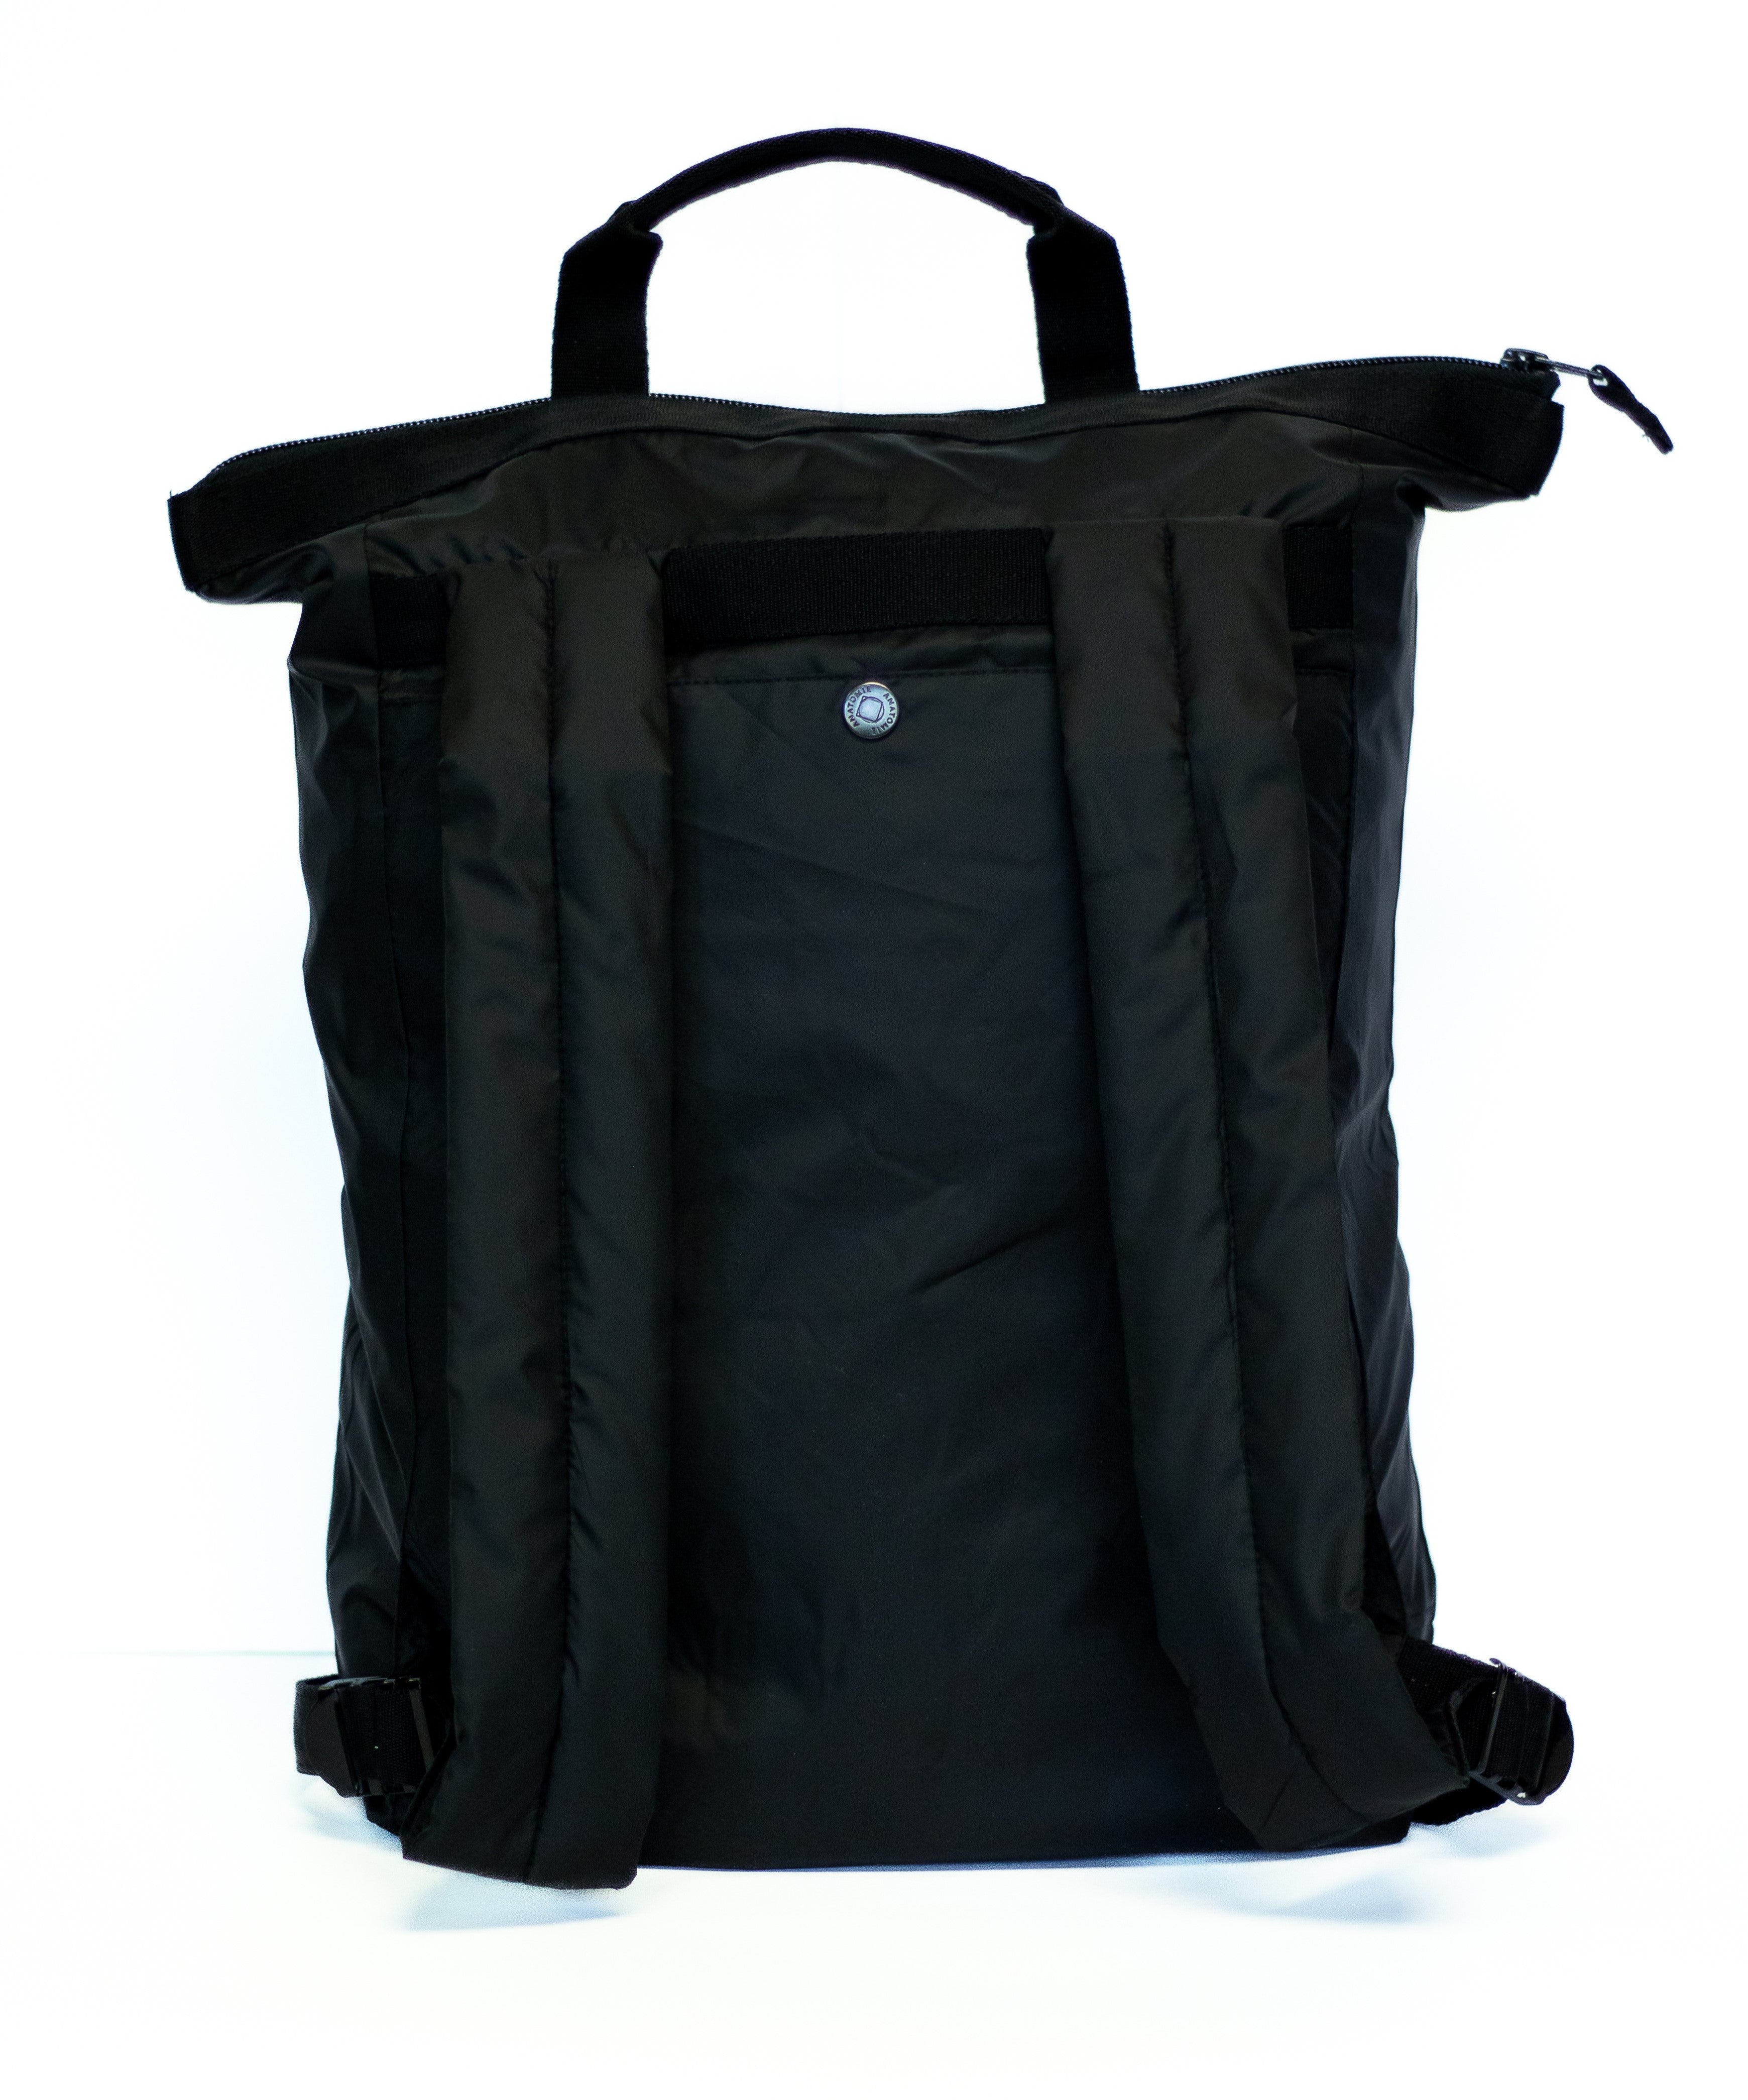 Miraval Backpack